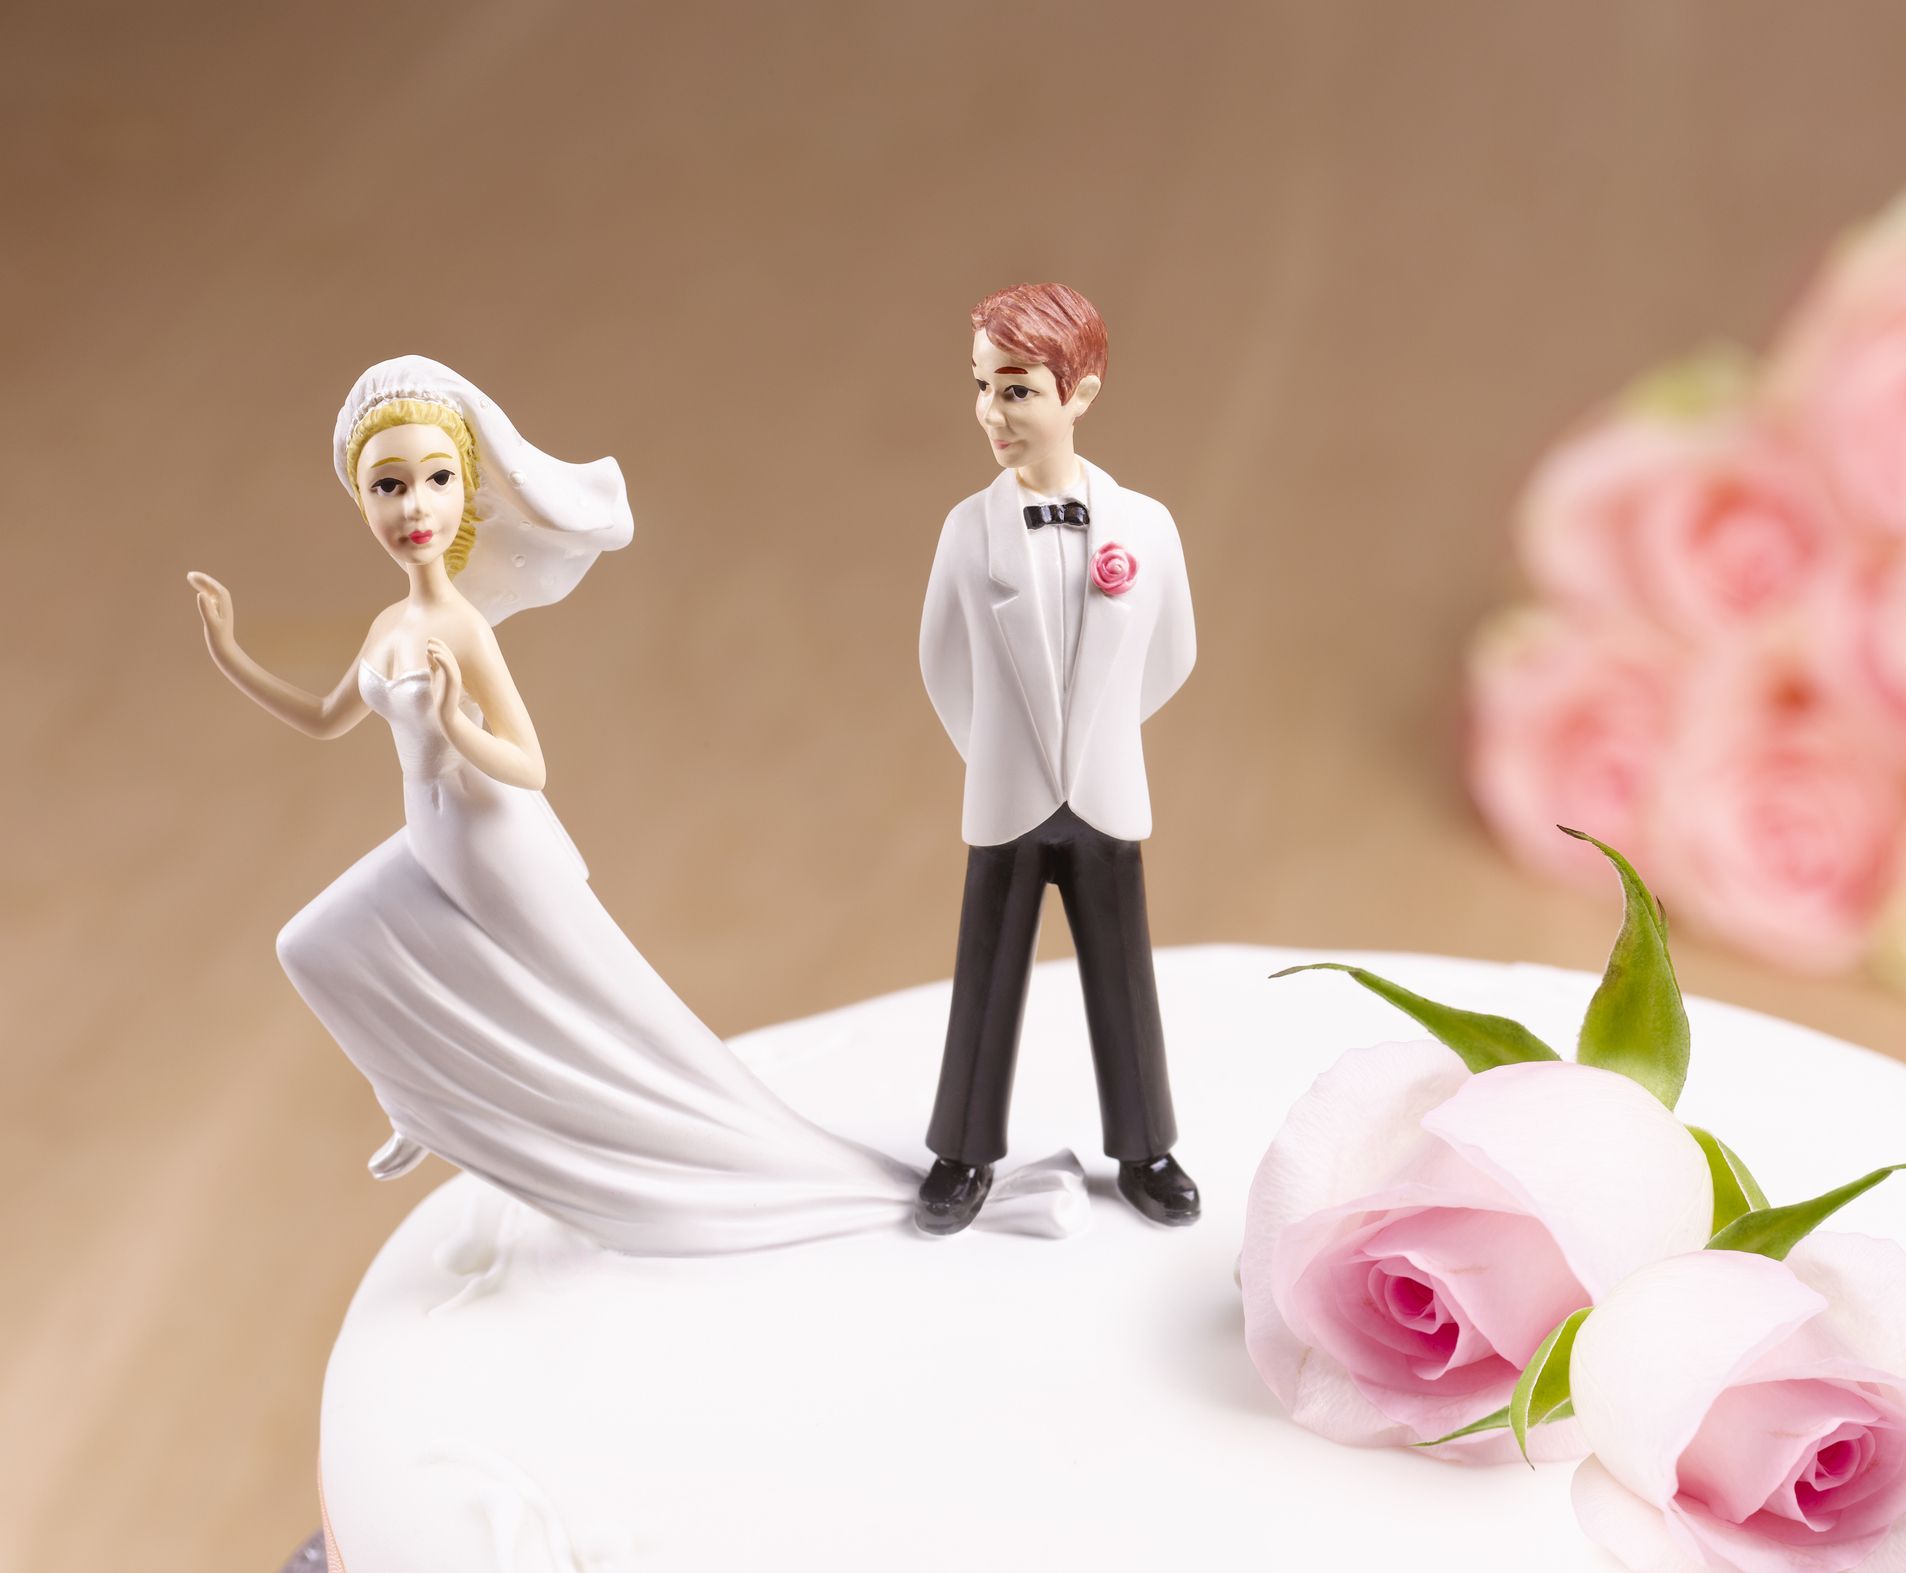 divorce party ideas for women